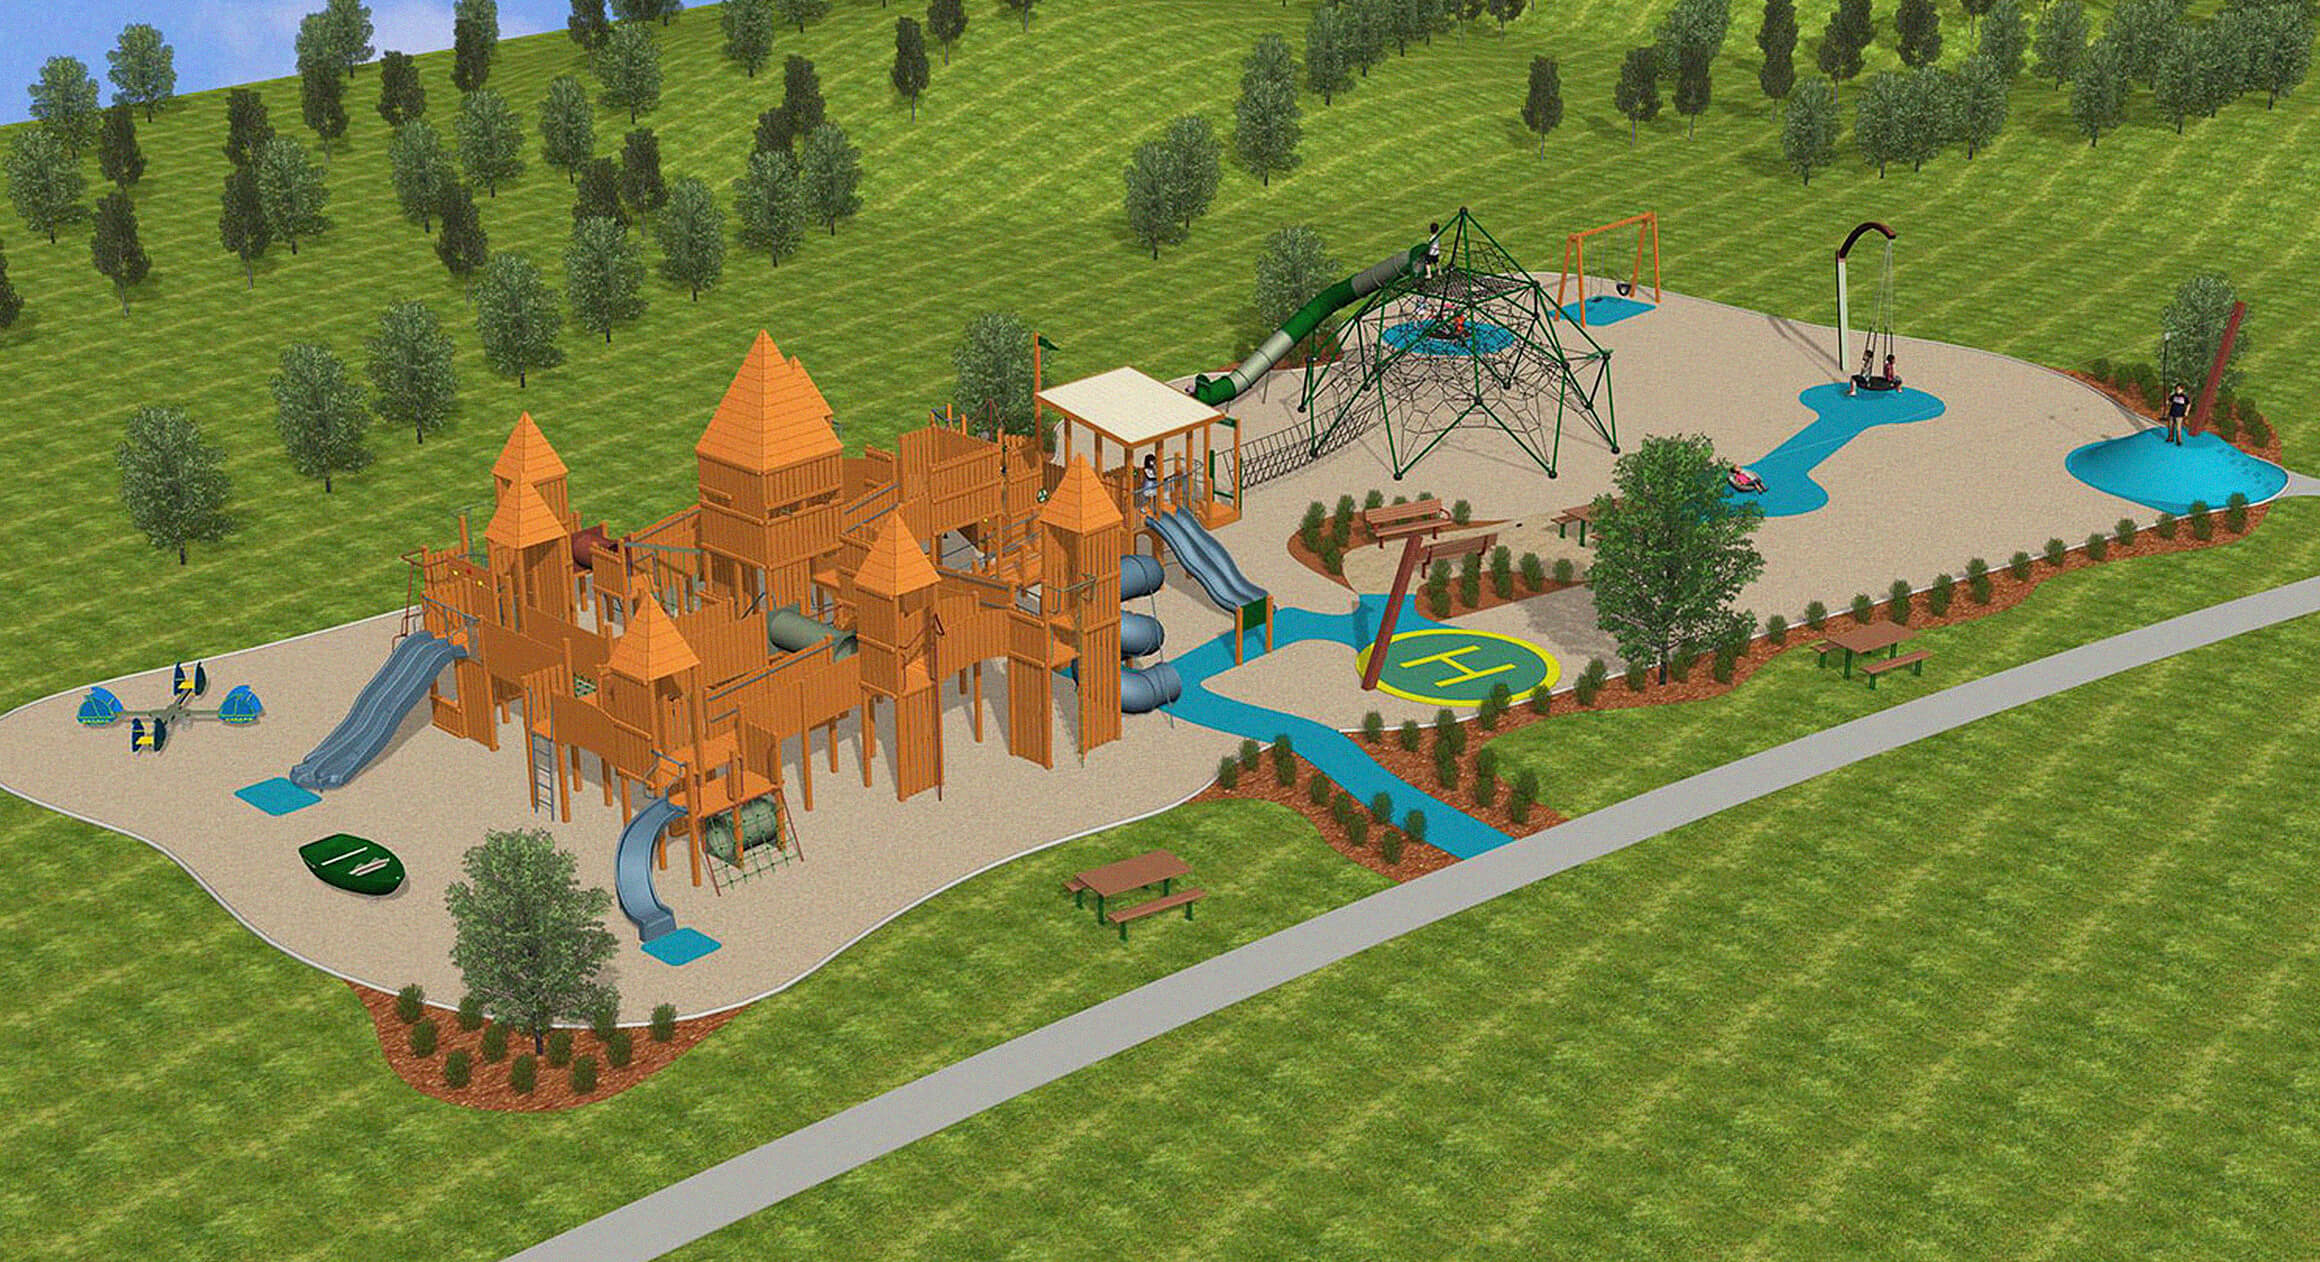 Playground Design Ideas